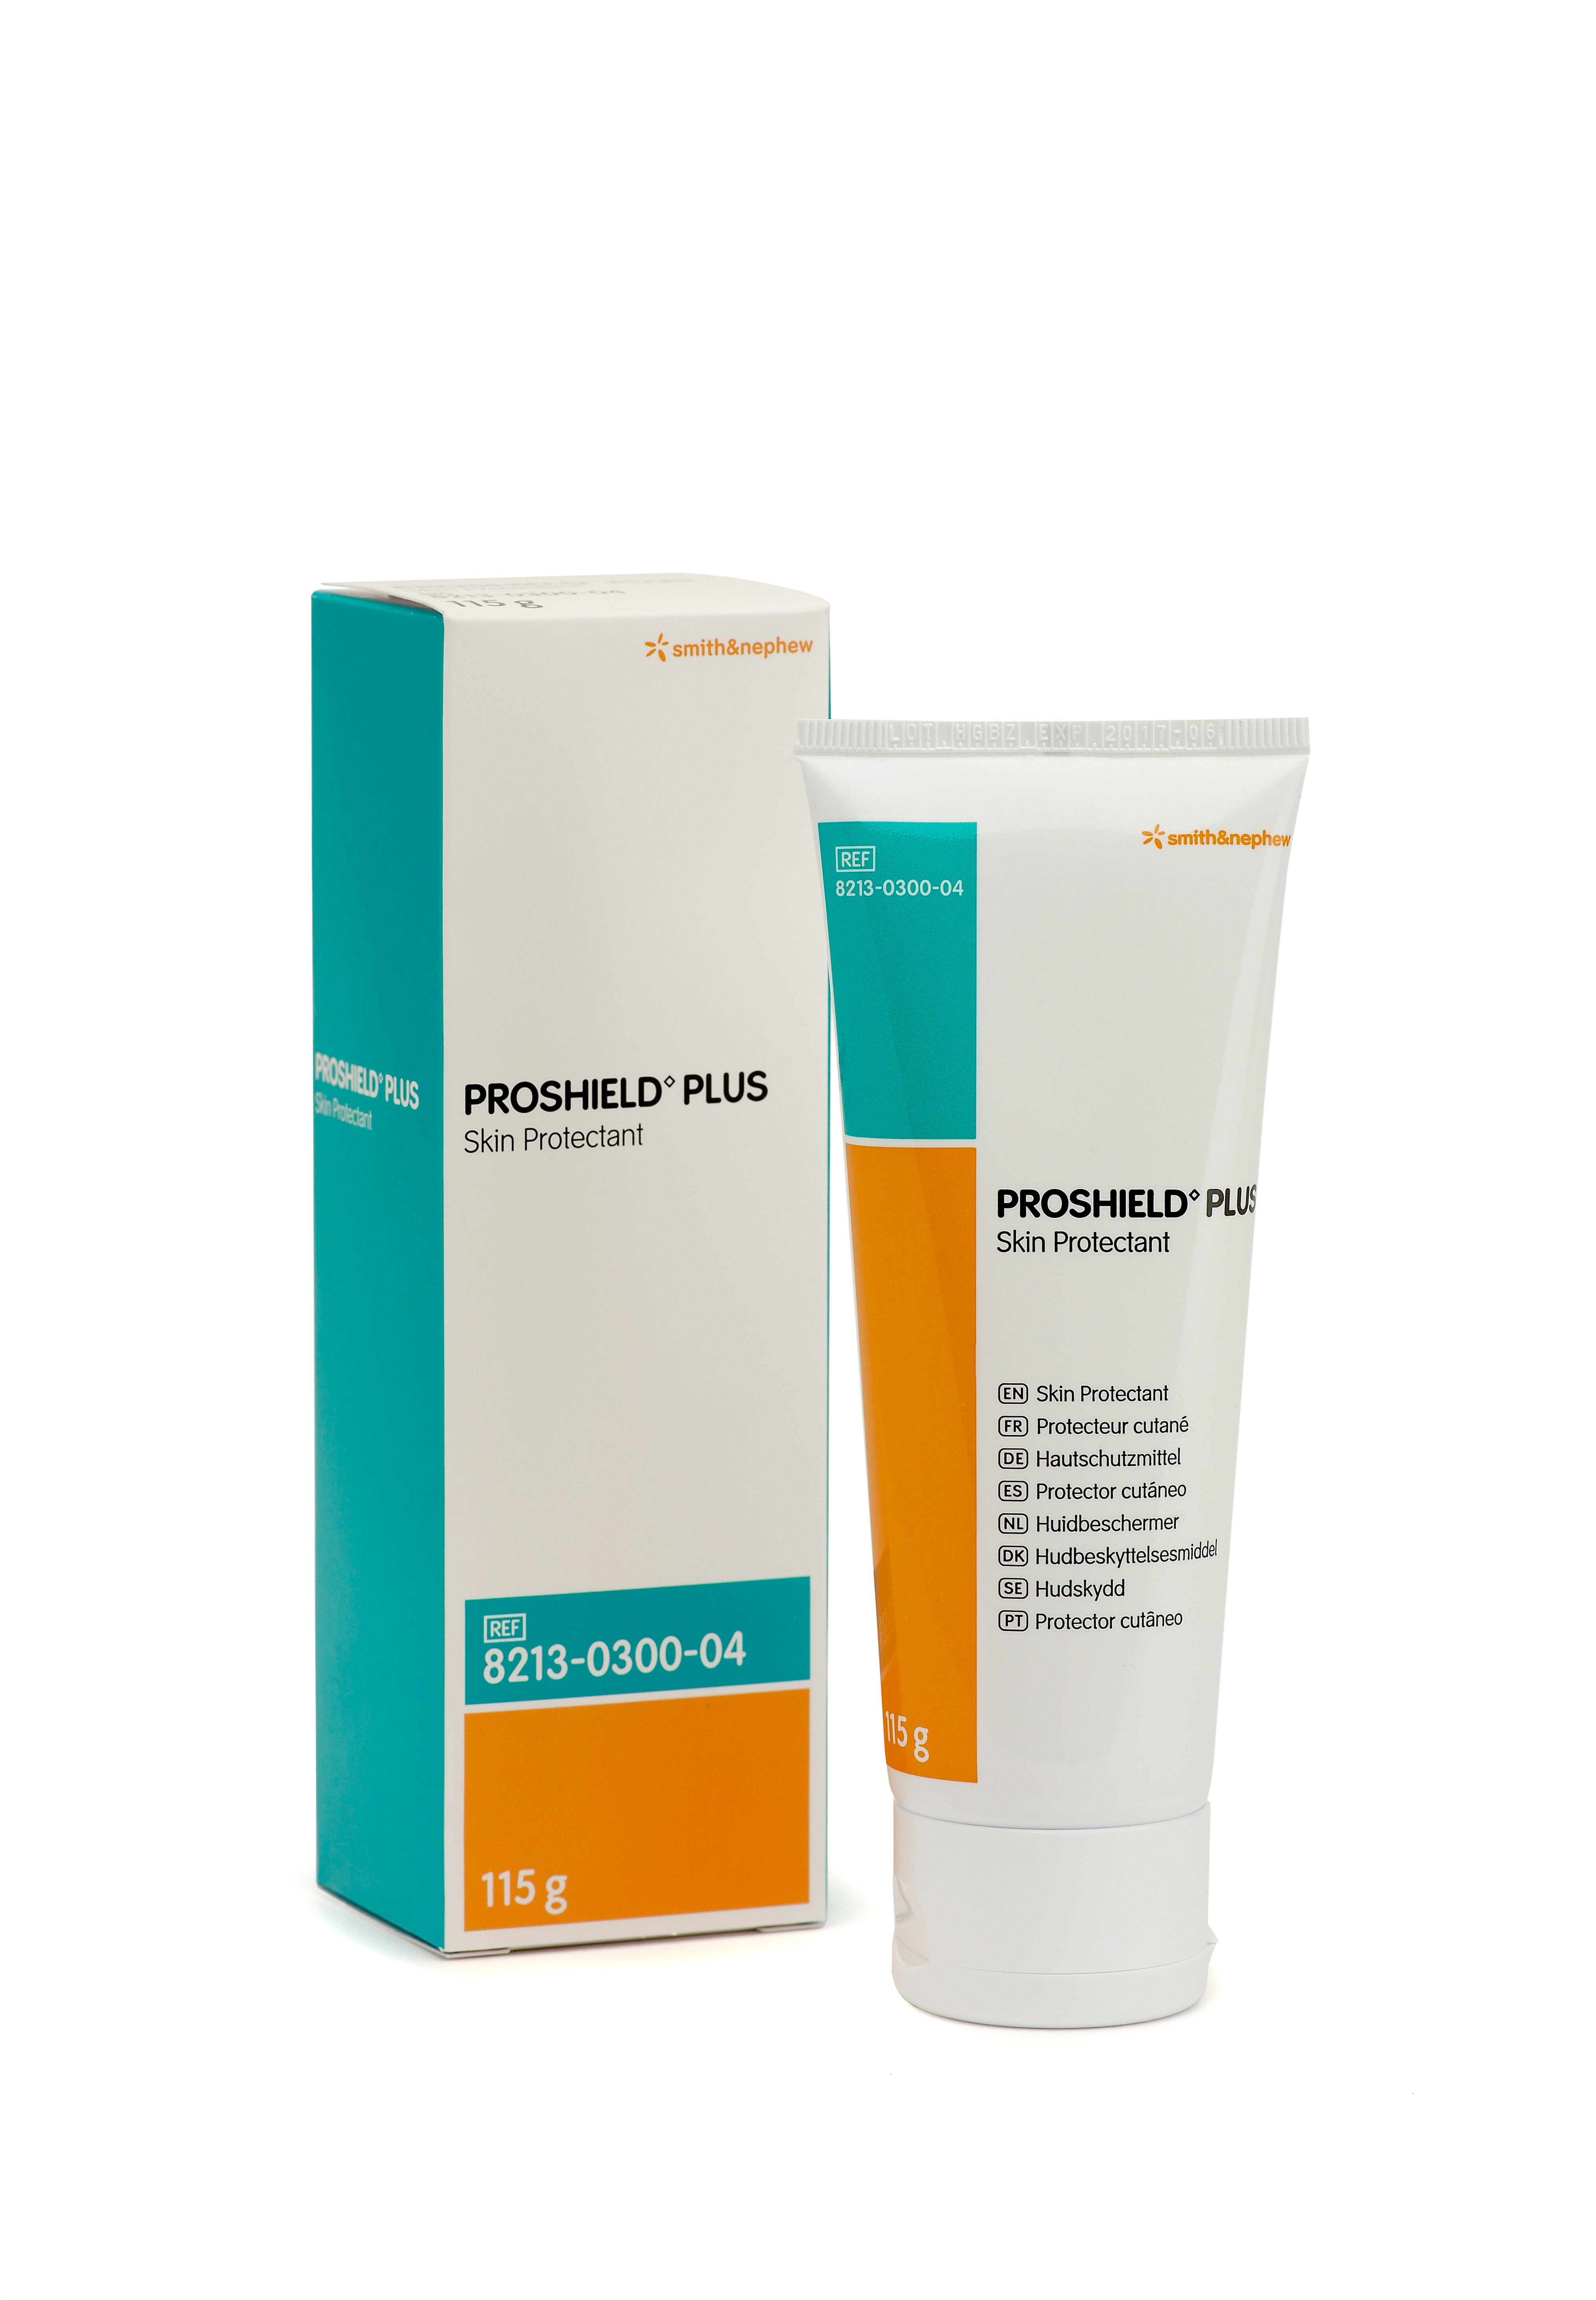 Proshield Plus Skin Protectant